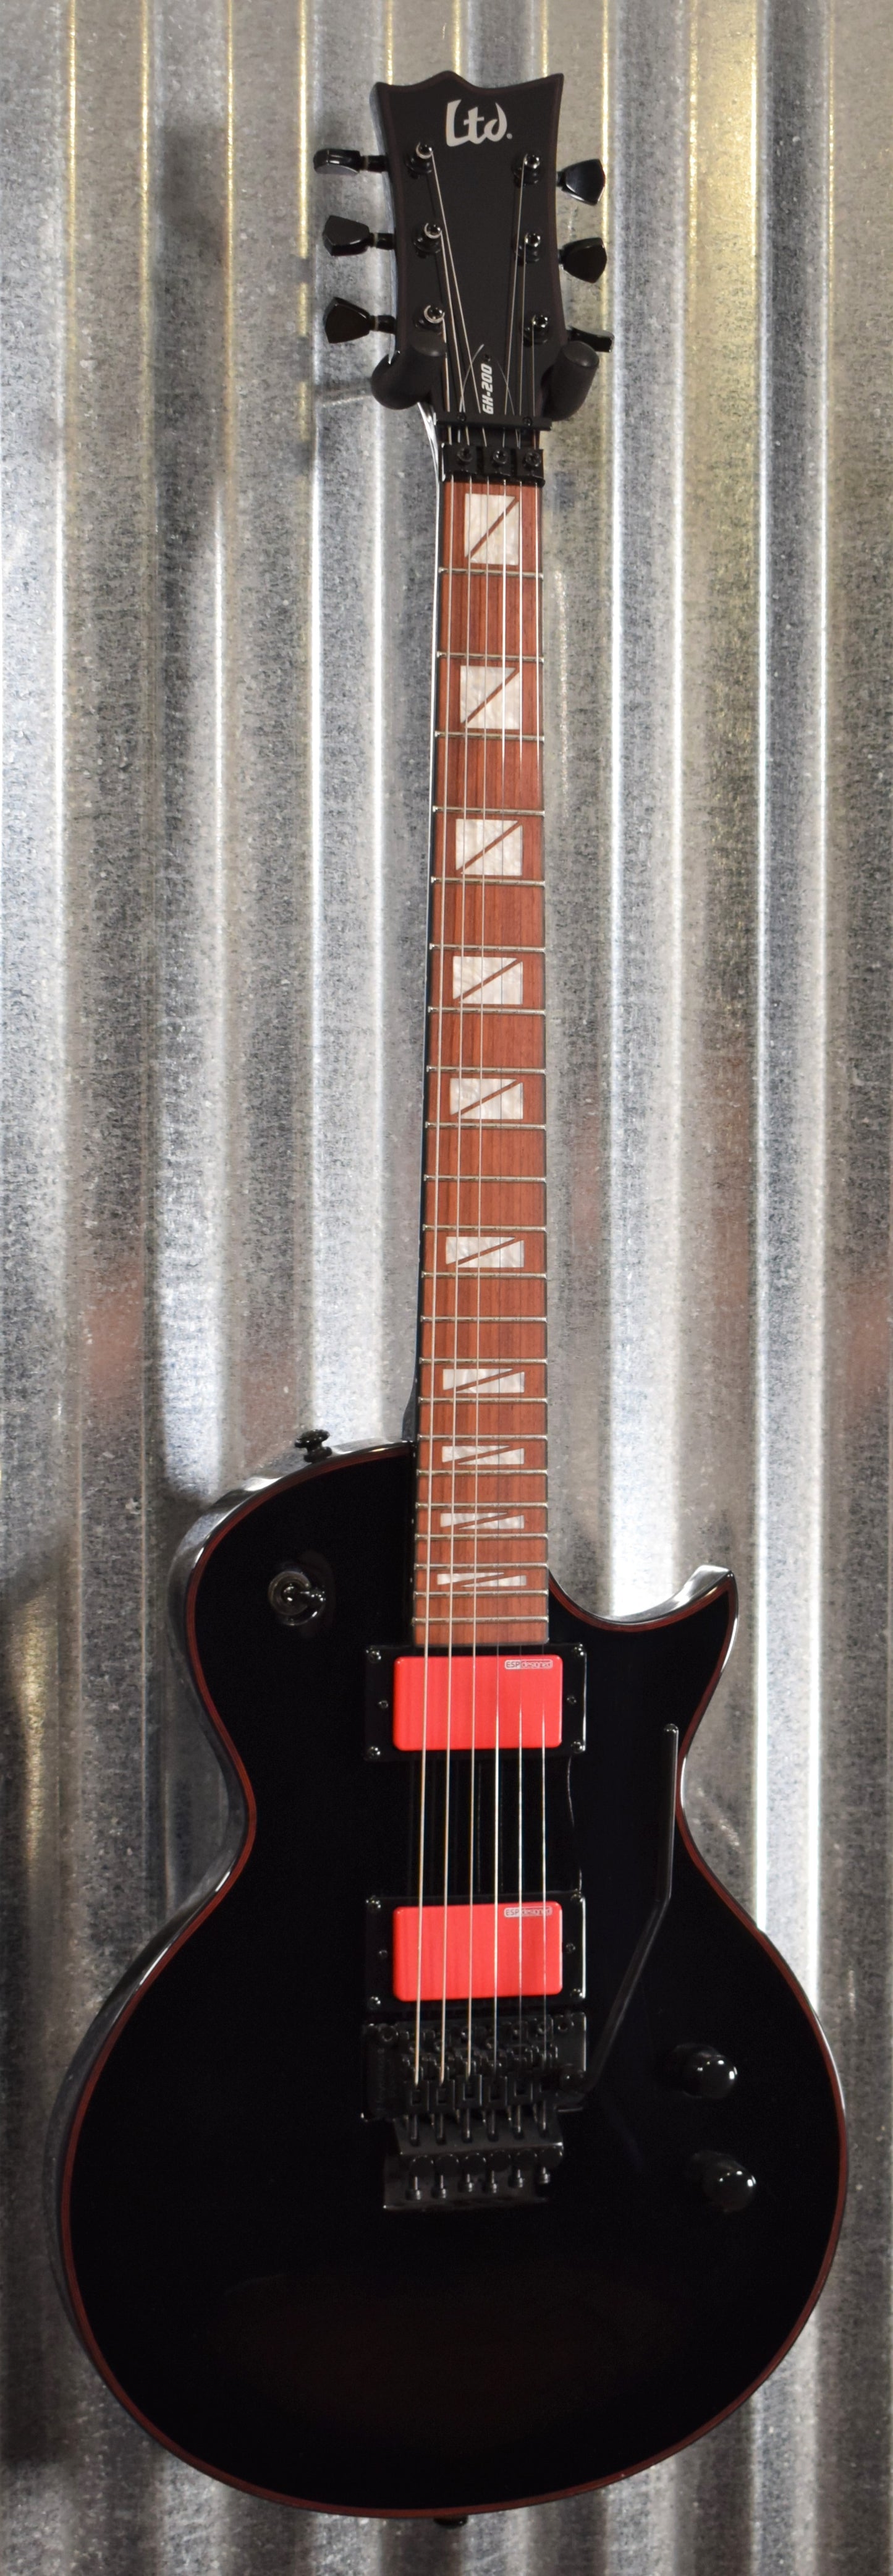 ESP LTD GH-200 Gary Holt Signature Gloss Black Guitar LGH200BLK #0765 B Stock